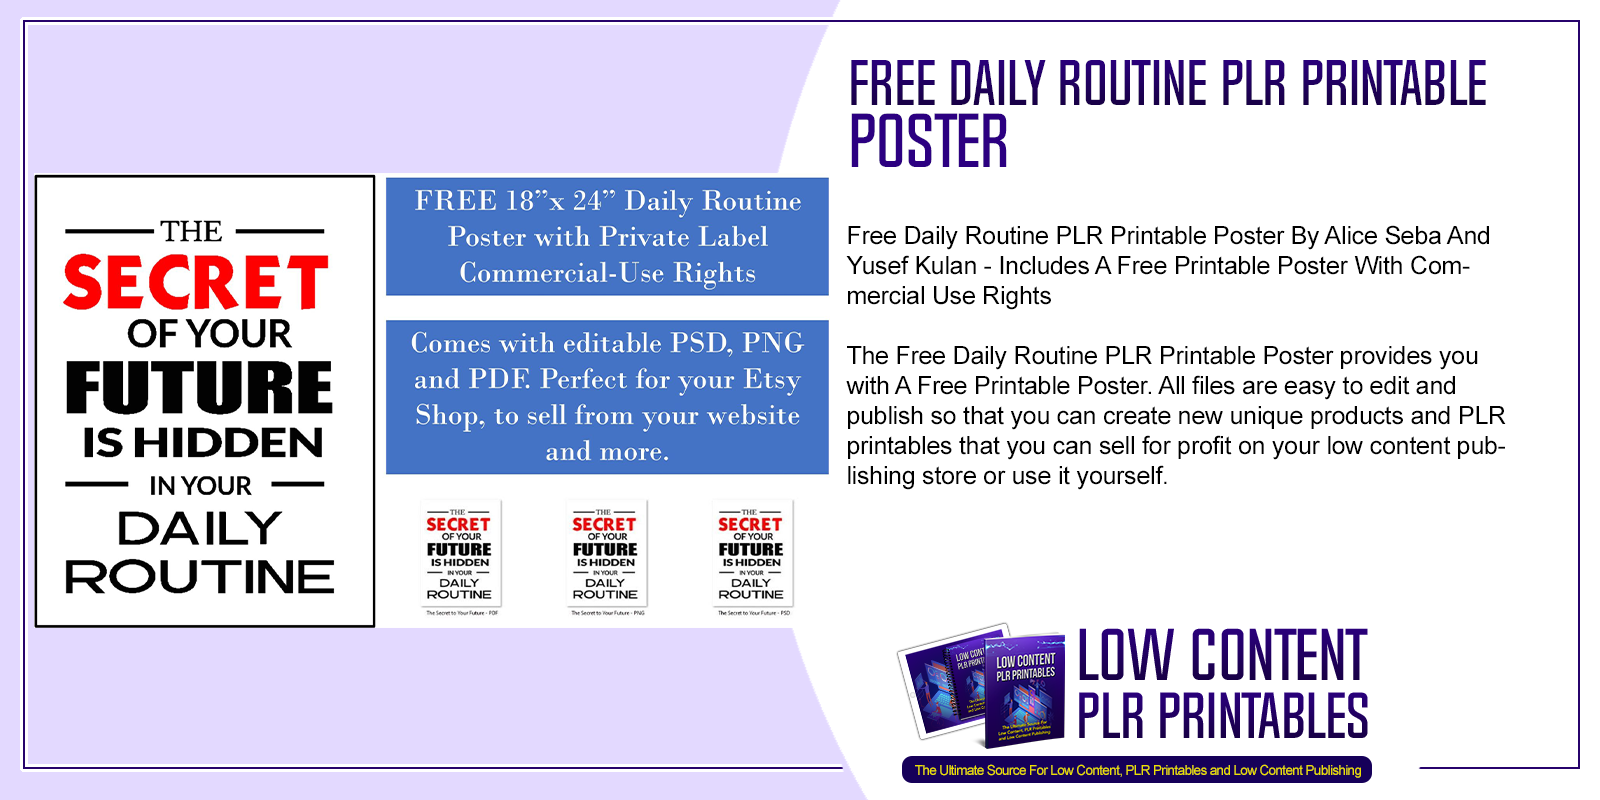 Free Daily Routine PLR Printable Poster